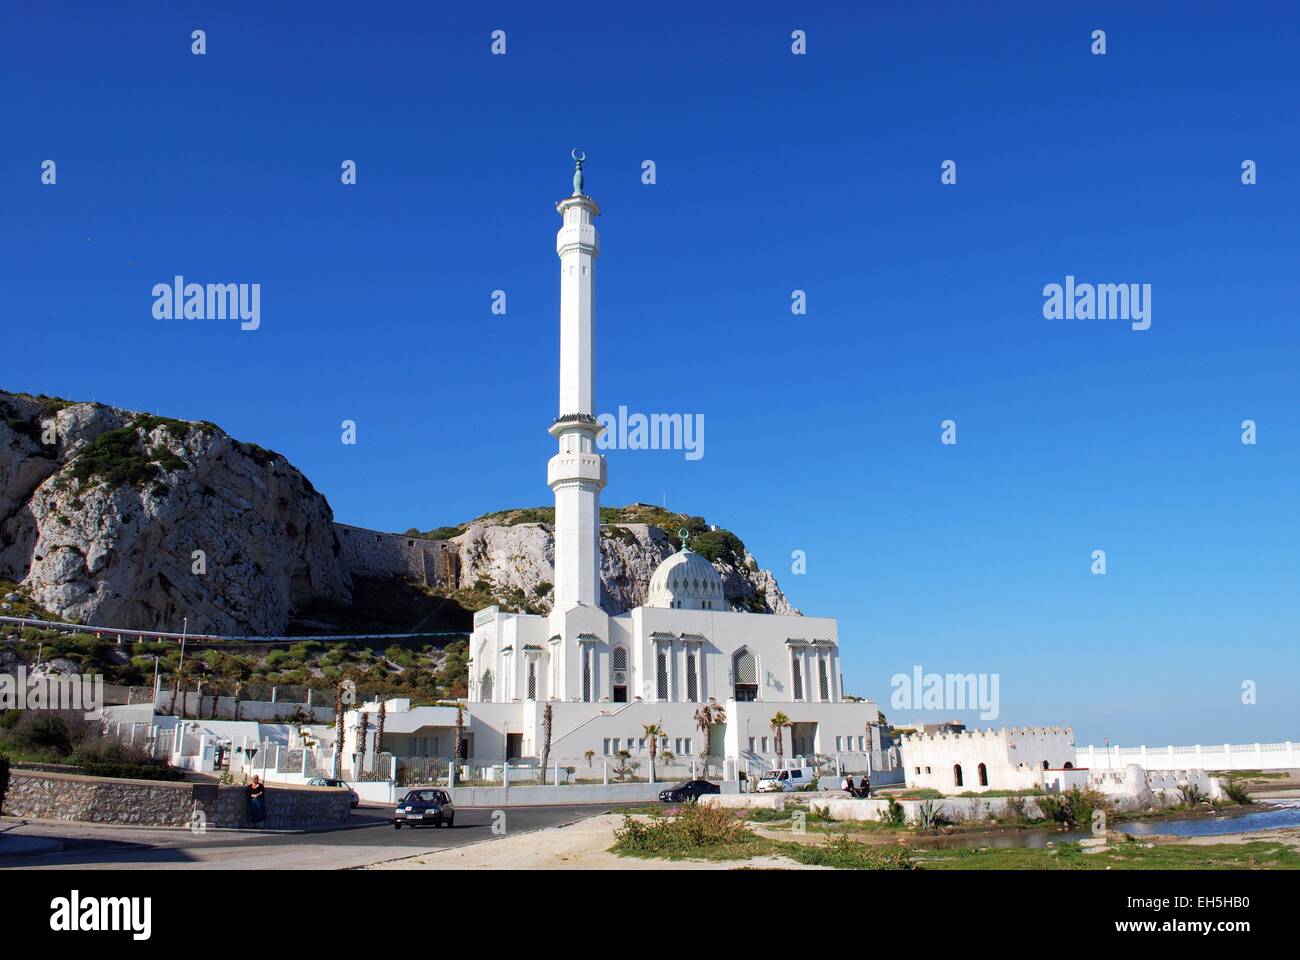 King Fahad Bin Abdul Aziz Al Saud Mosque with the rock to the rear, Gibraltar, United Kingdom, Western Europe. Stock Photo